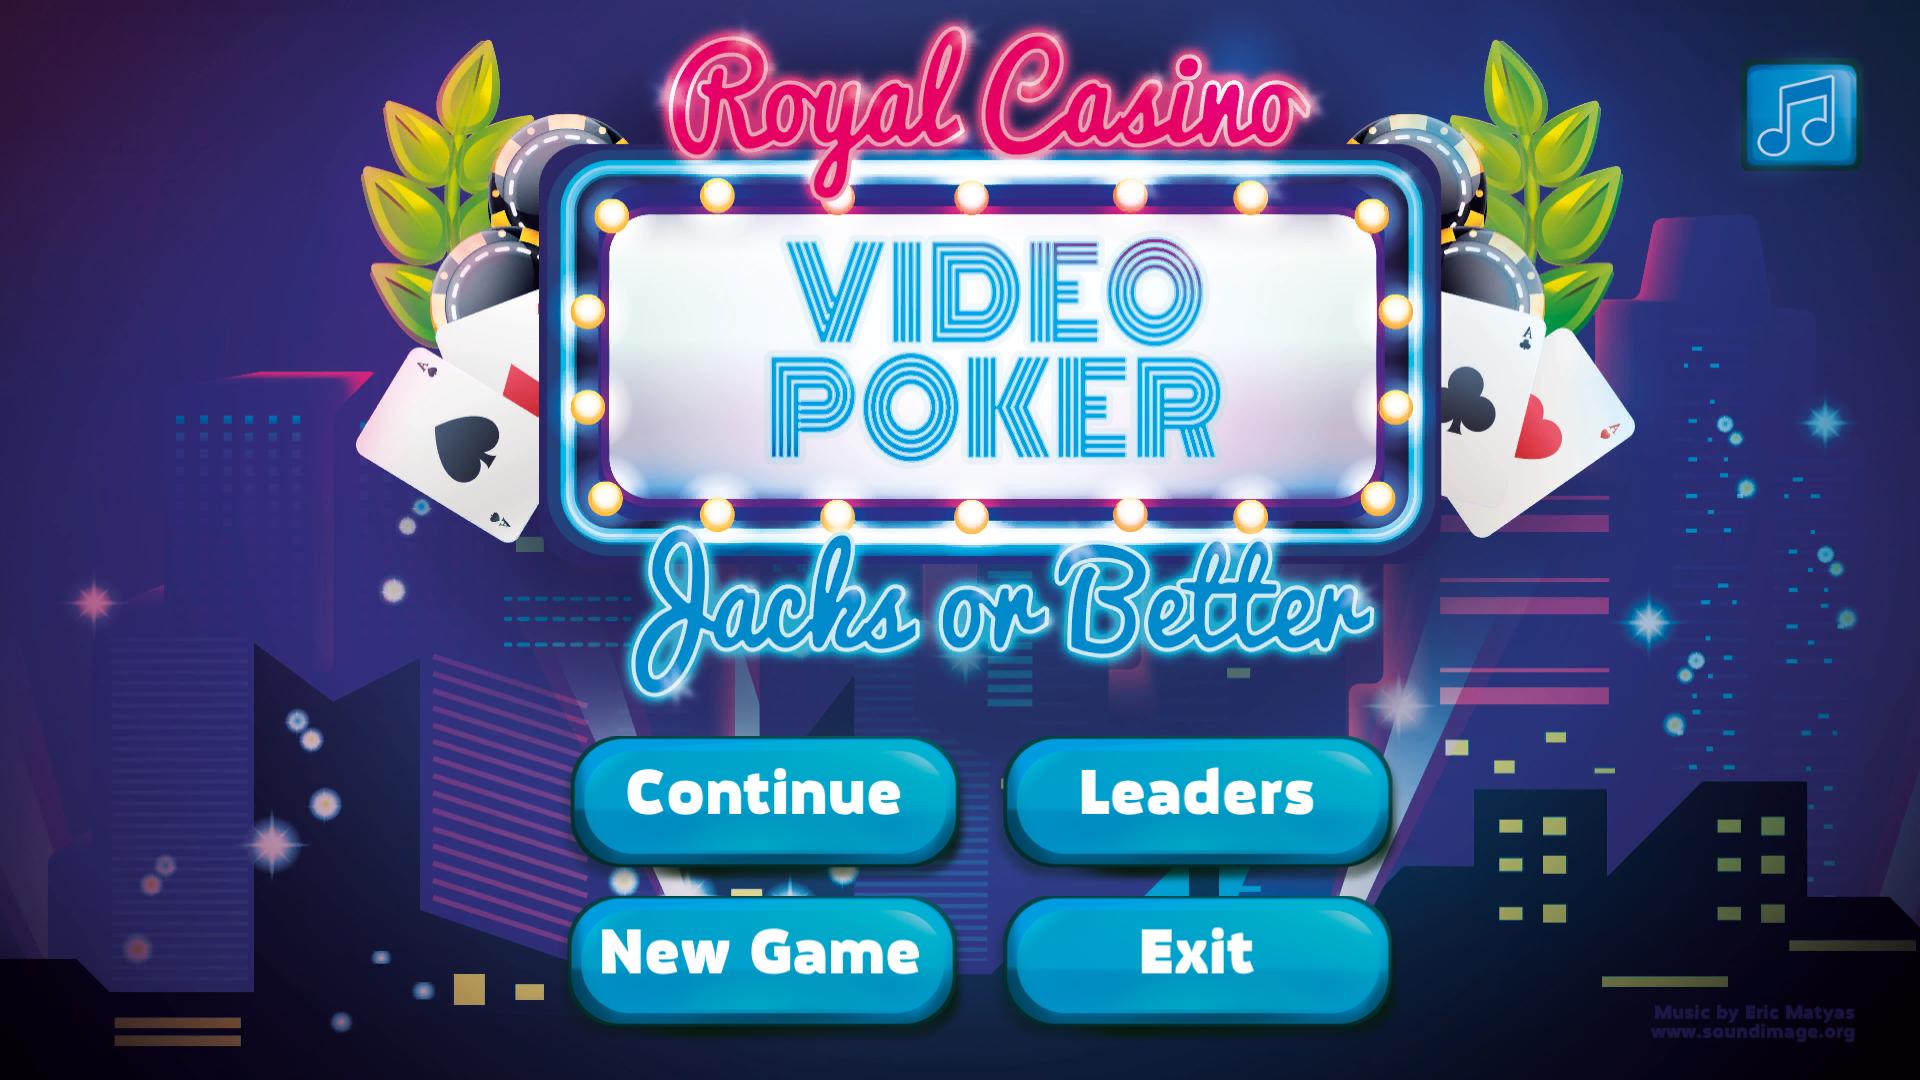 royal casino offers